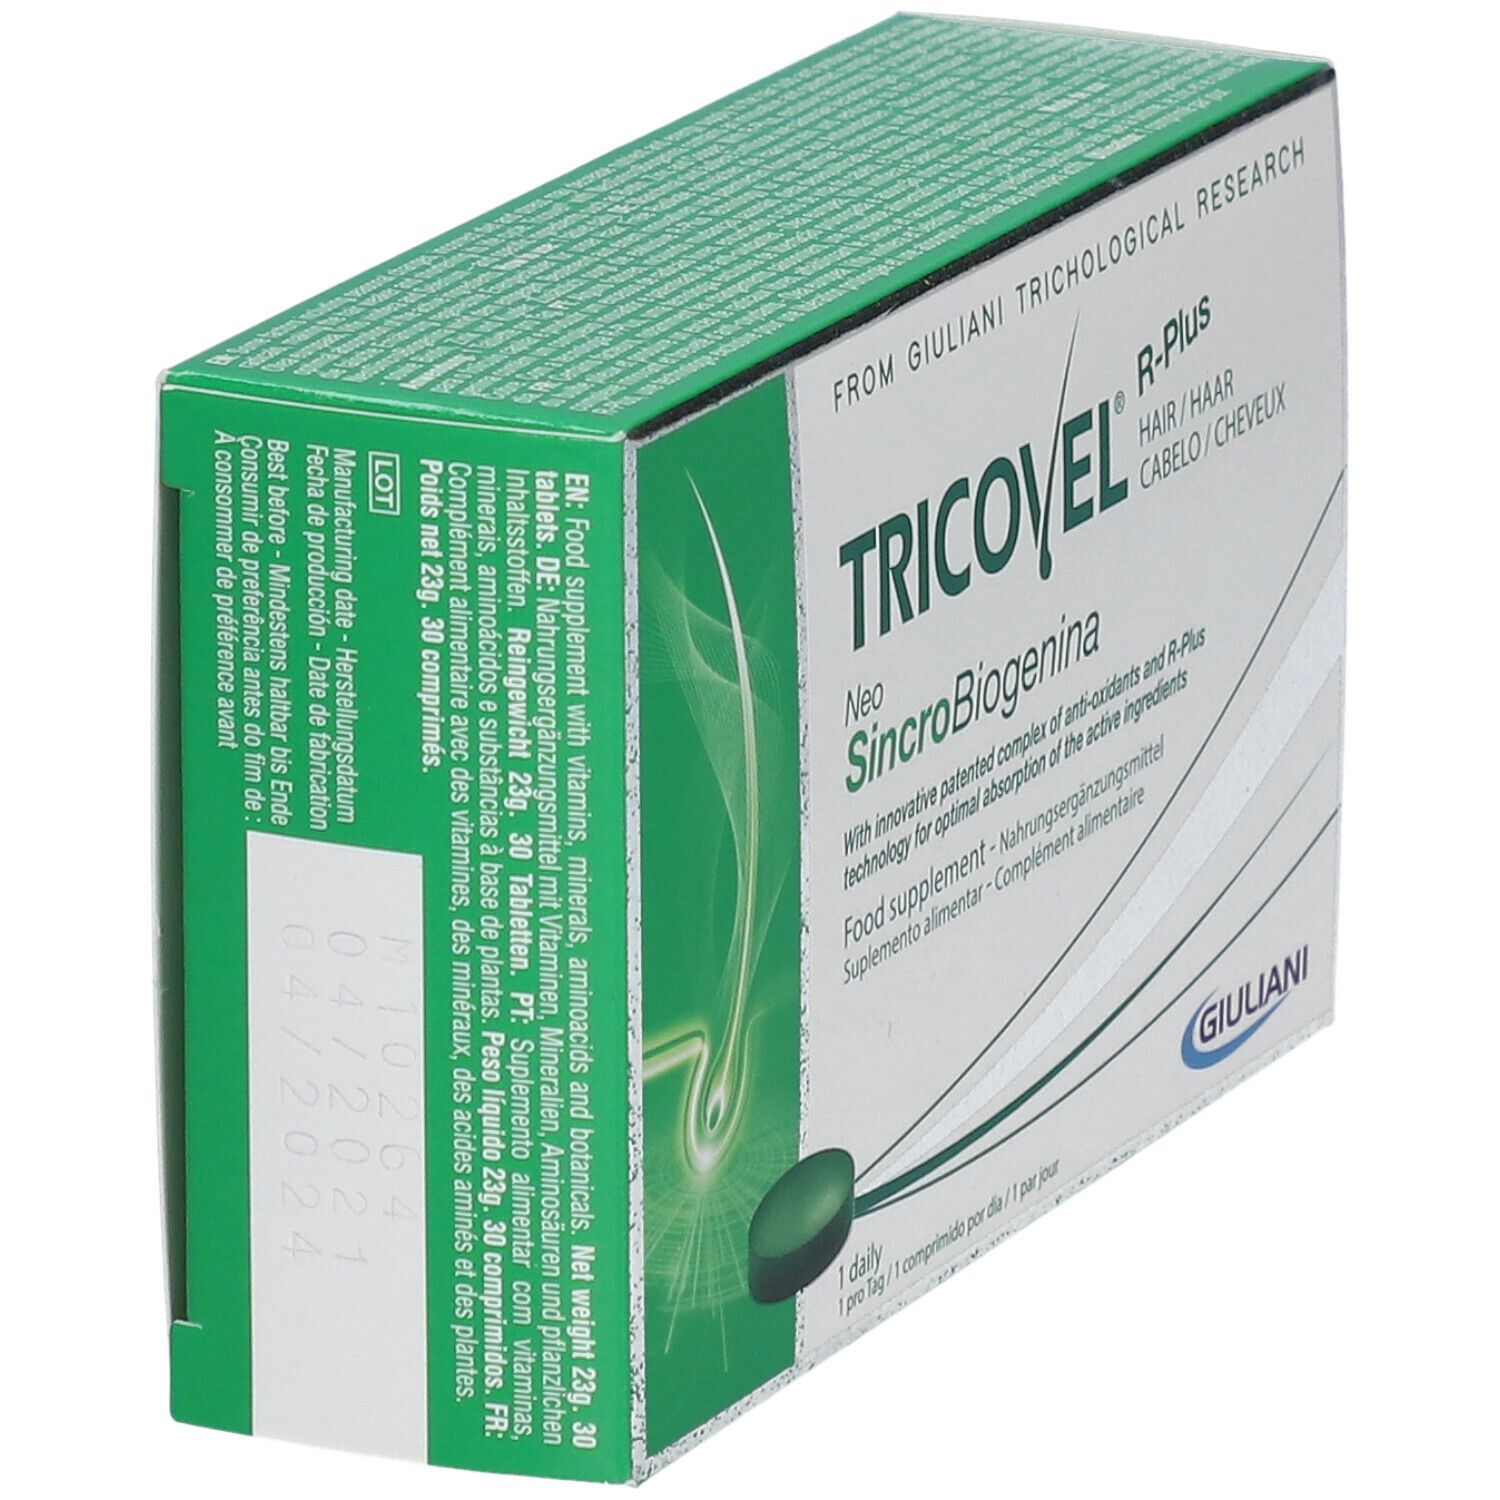 TRICOVEL® Neo SincroBiogenina Tabletten